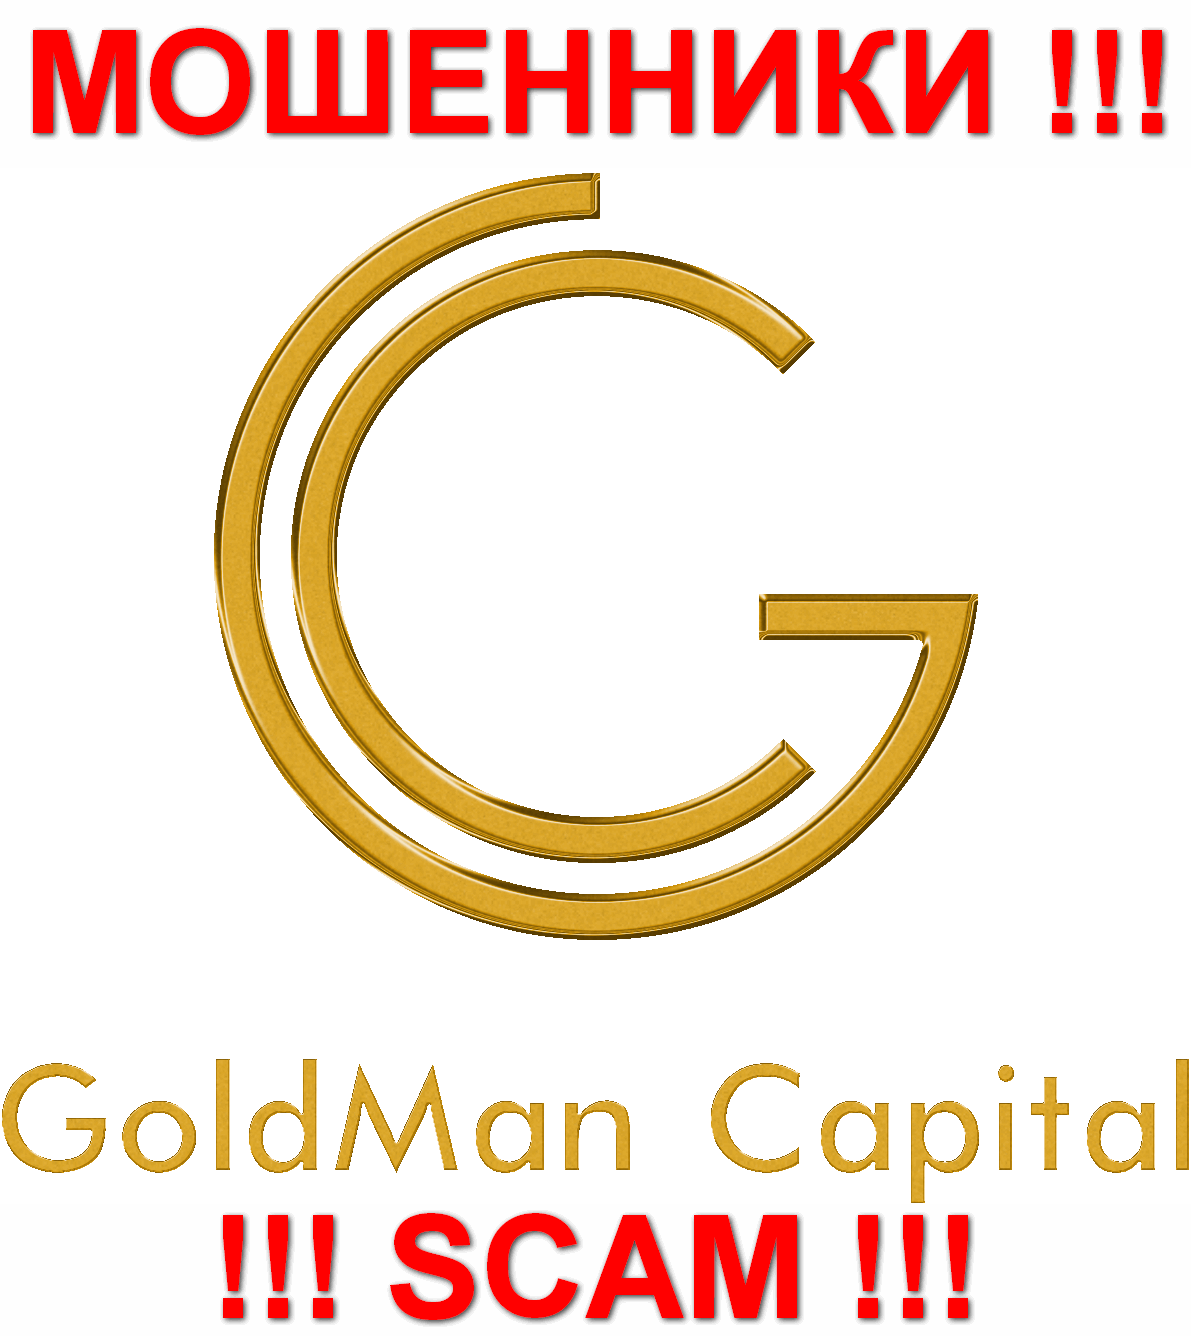 GoldmanCapital Ru - КИДАЛЫ !!! SCAM !!!